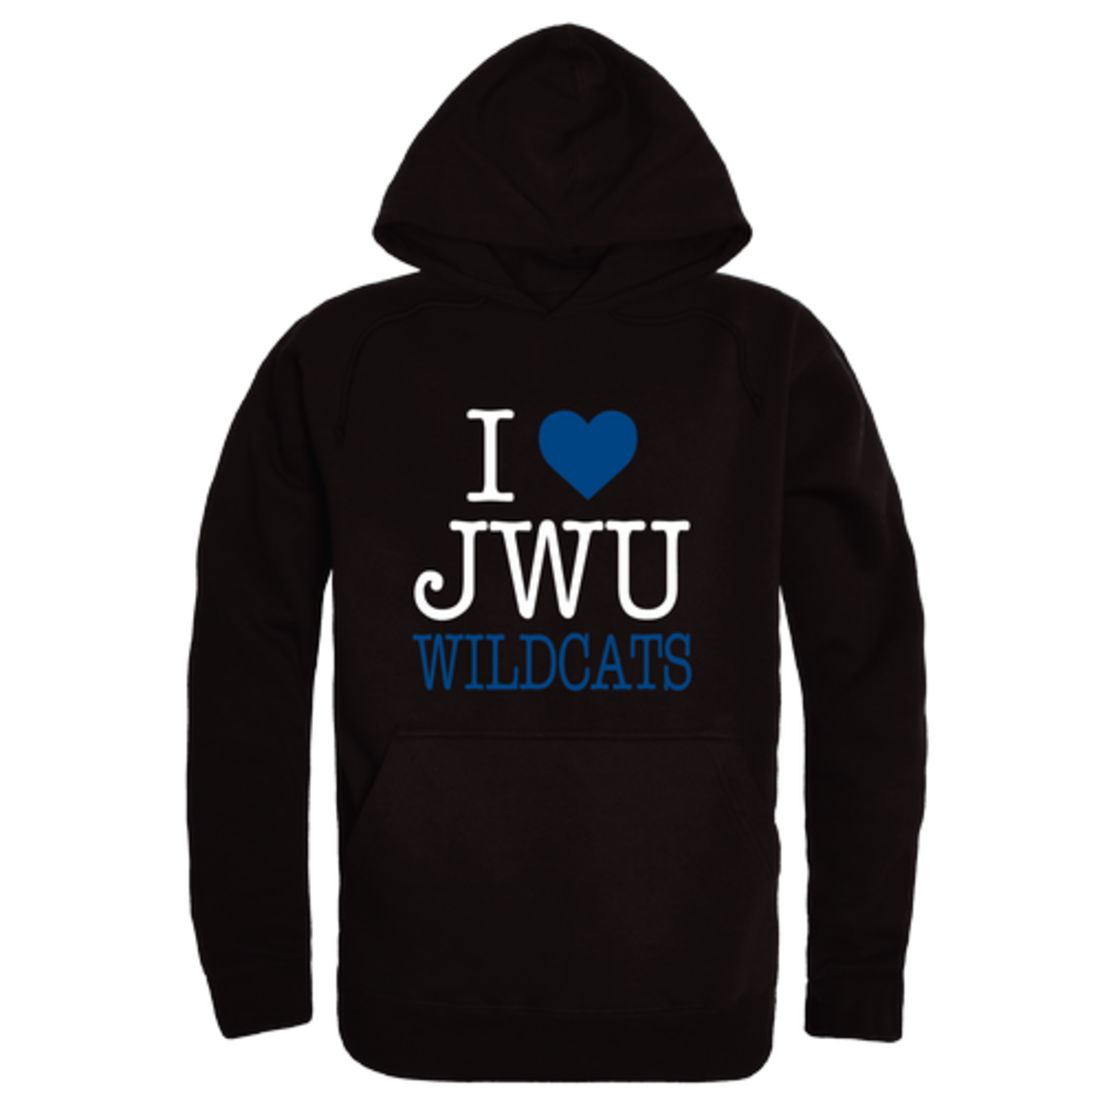 I-Love-Johnson-&-Wales-University-Wildcats-Fleece-Hoodie-Sweatshirts